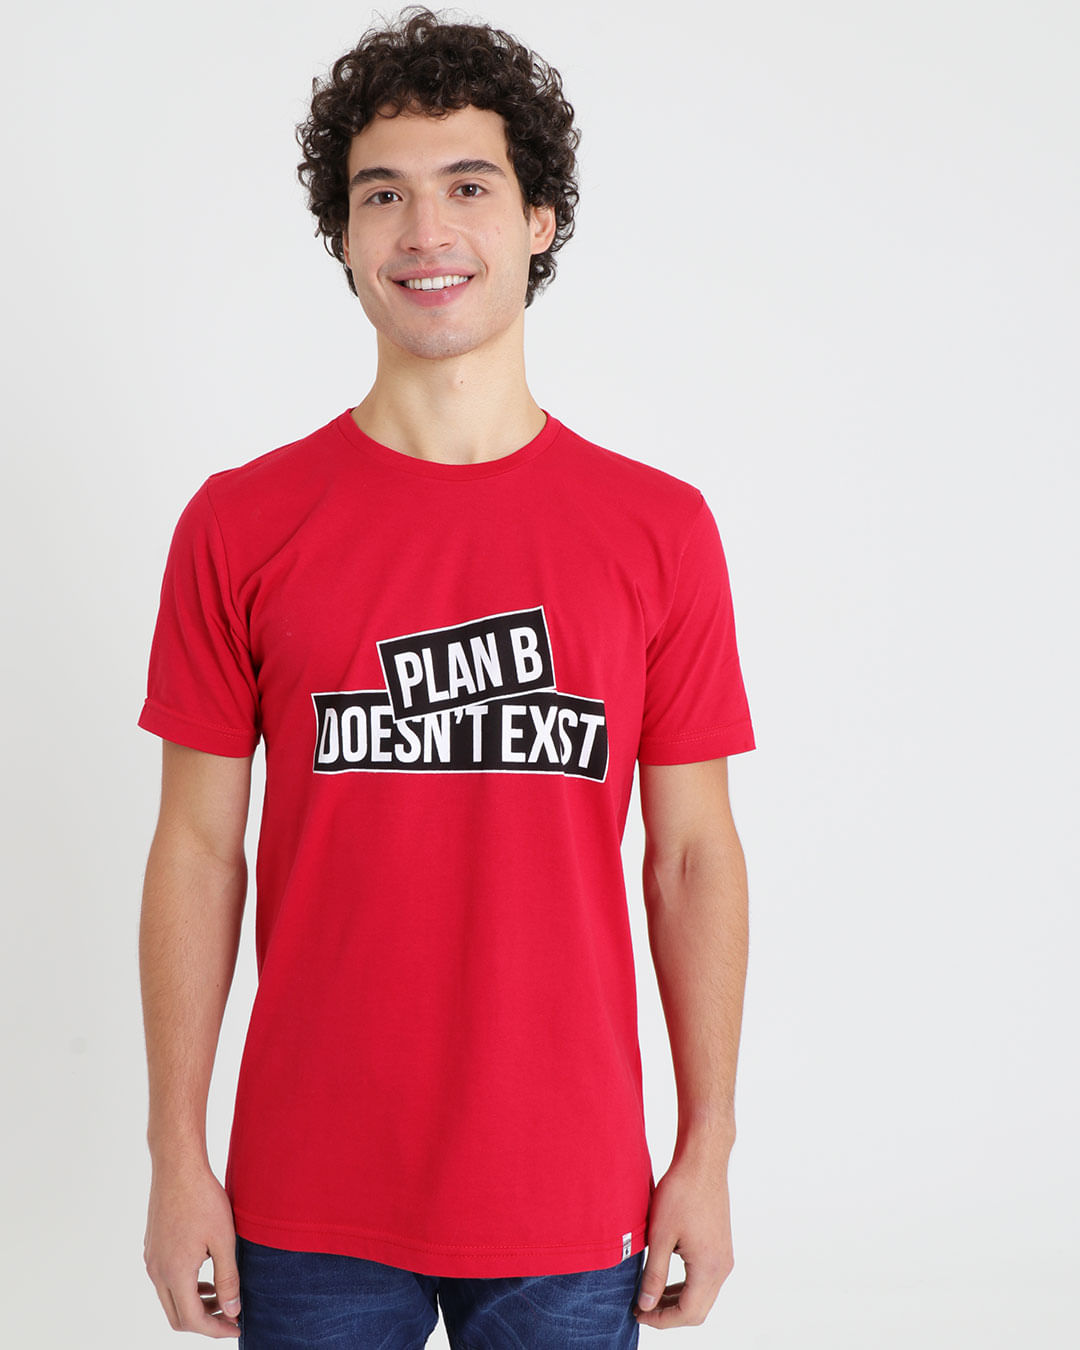 Camiseta-Masculina-Manga-Curta-Estampada-Plan-B-Vermelha